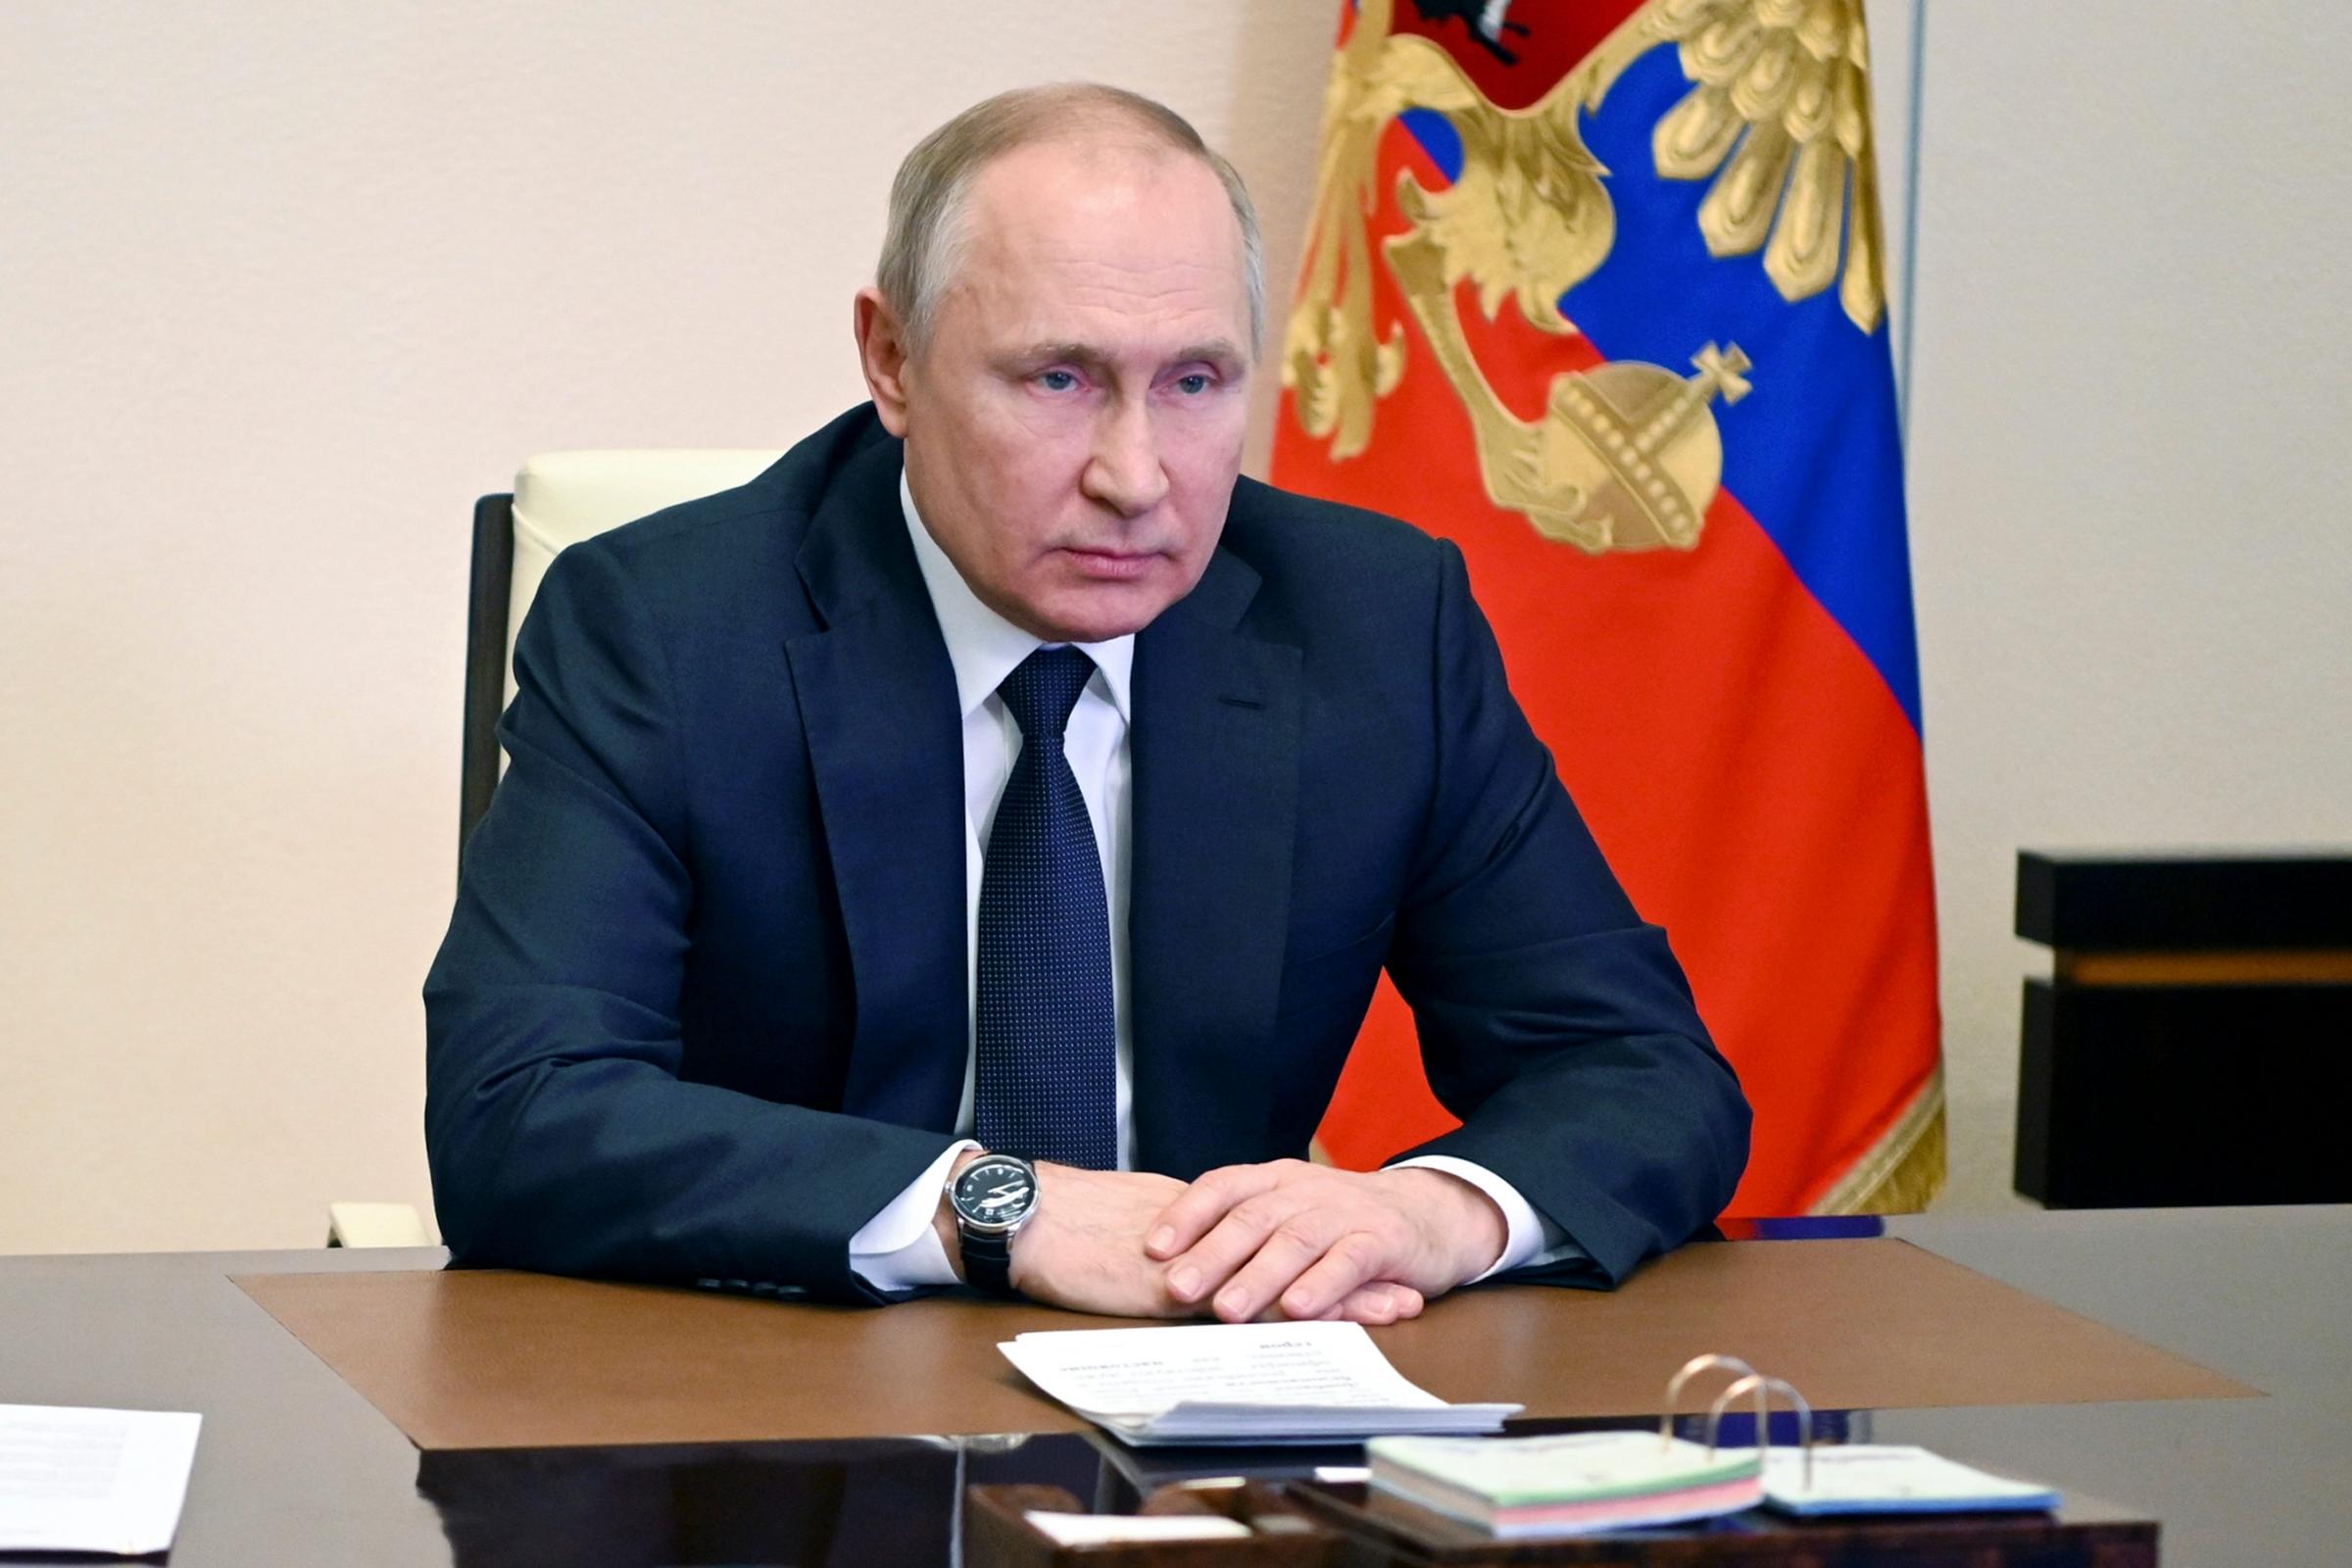 Vladimir Putin says he backs talks but Ukraine must comply with Russia’s demands